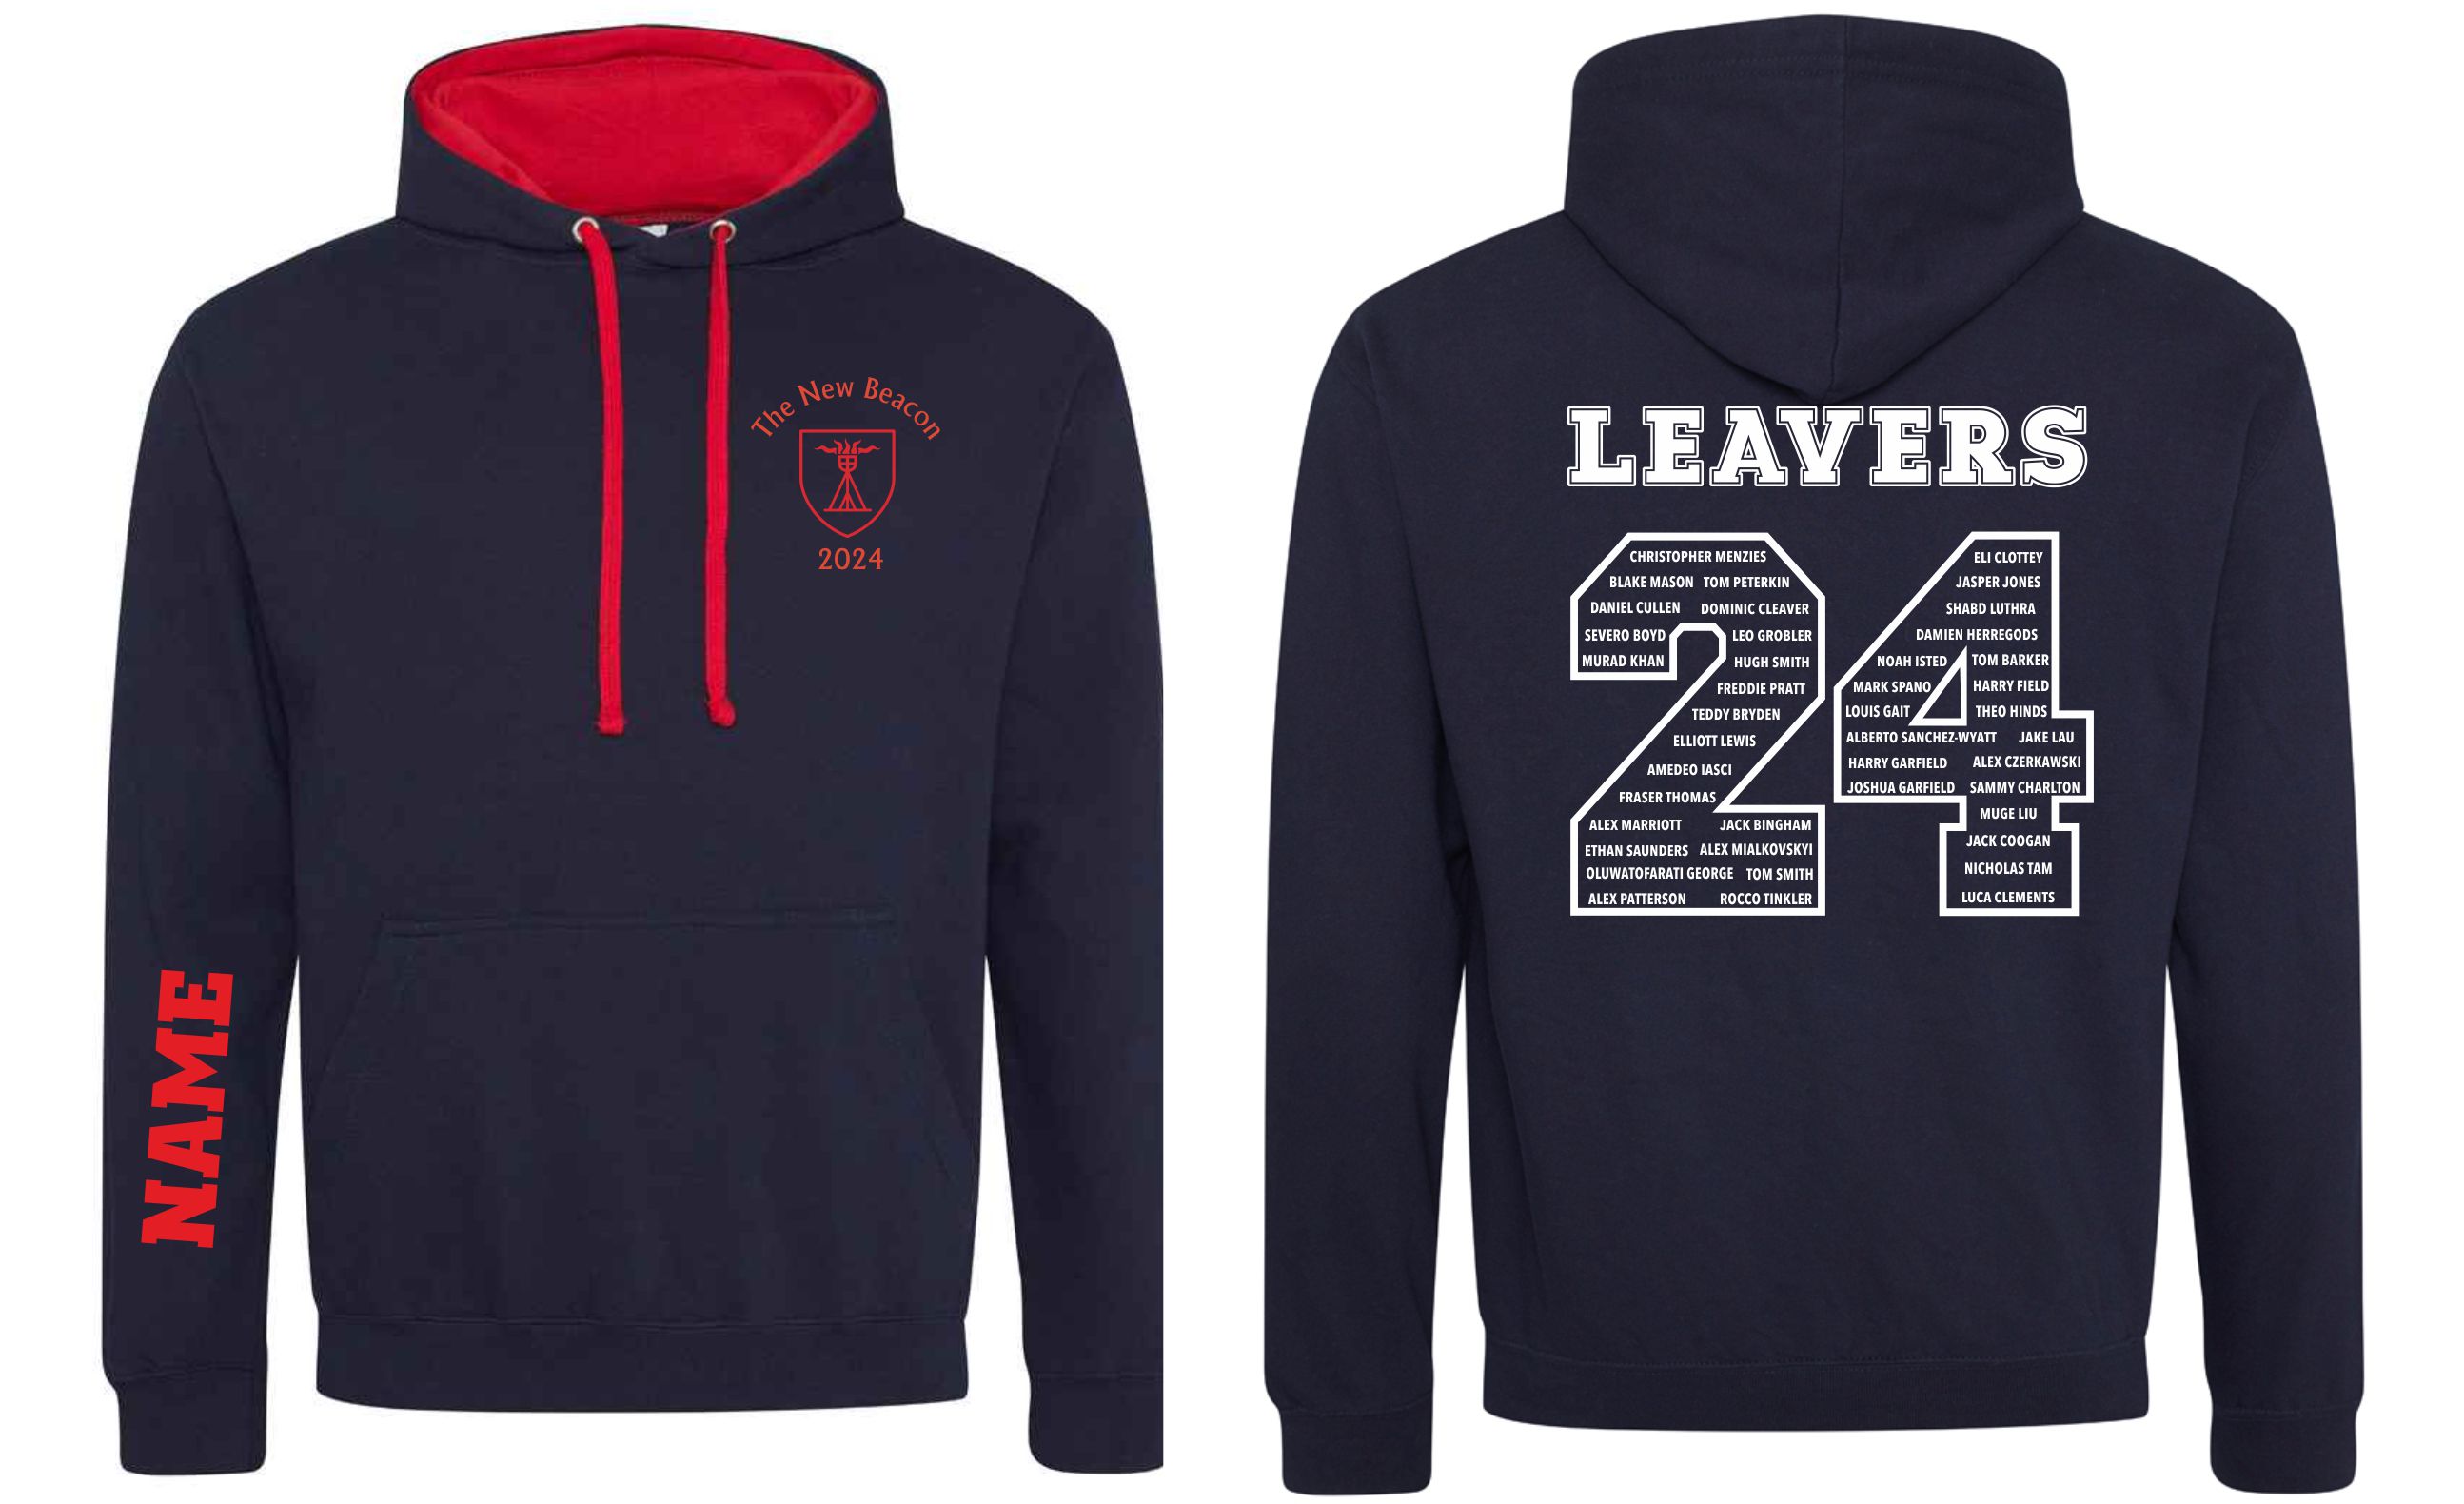 New Beacon YEAR 8 Leavers hoodie KIDS Sizes